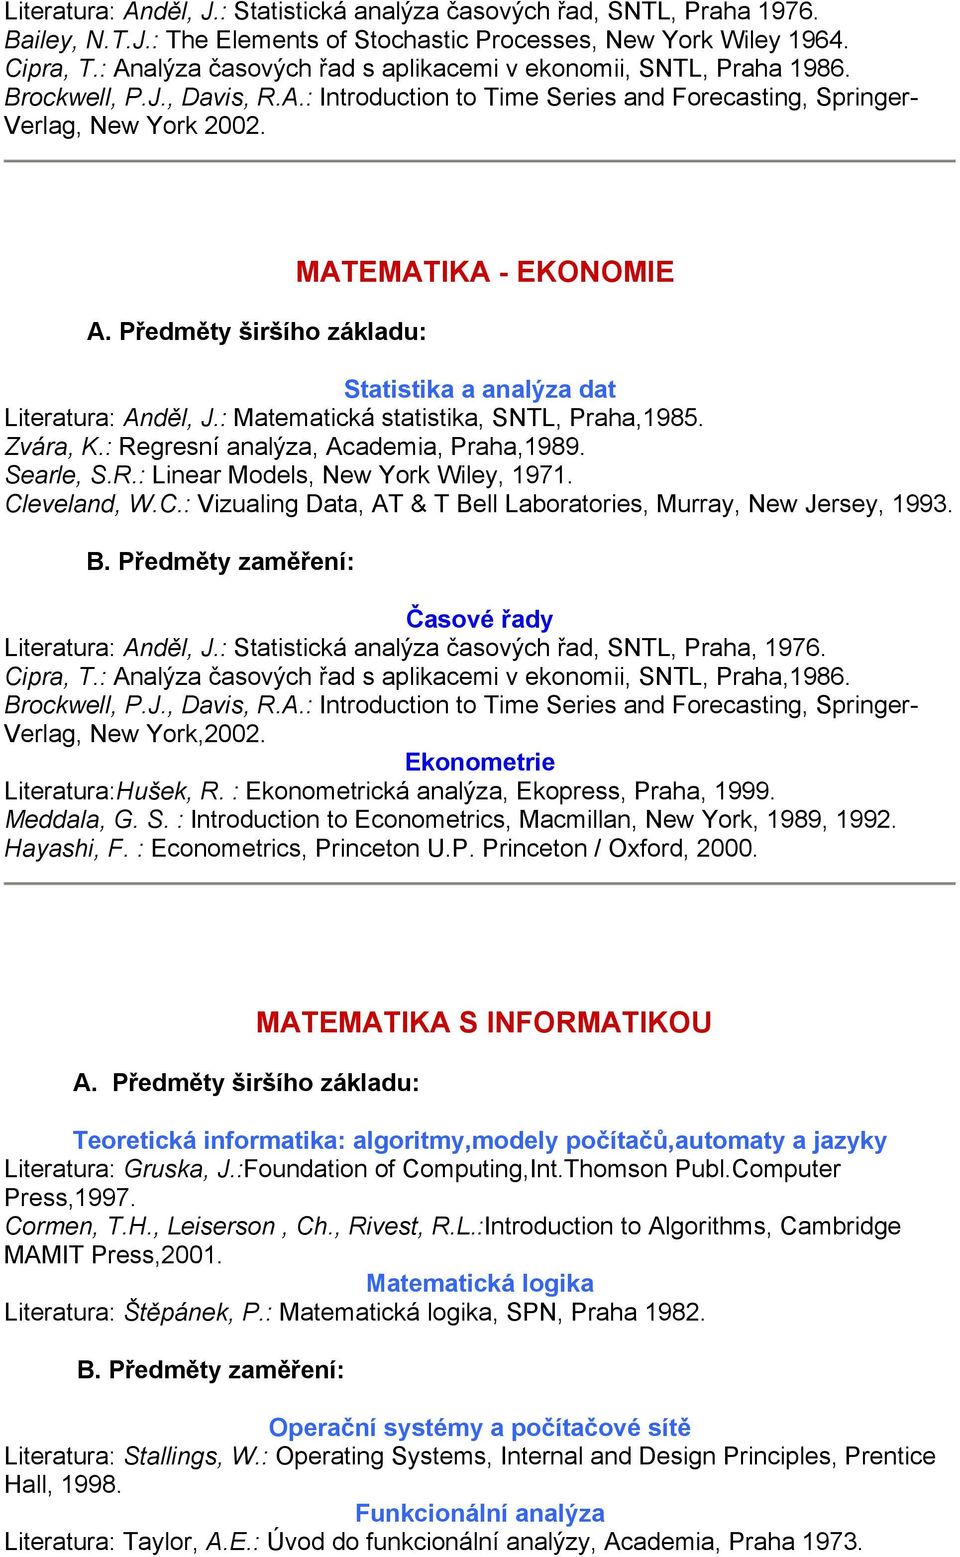 MATEMATIKA - EKONOMIE Statistika a analýza dat Literatura: Anděl, J.: Matematická statistika, SNTL, Praha,1985. Zvára, K.: Regresní analýza, Academia, Praha,1989. Searle, S.R.: Linear Models, New York Wiley, 1971.